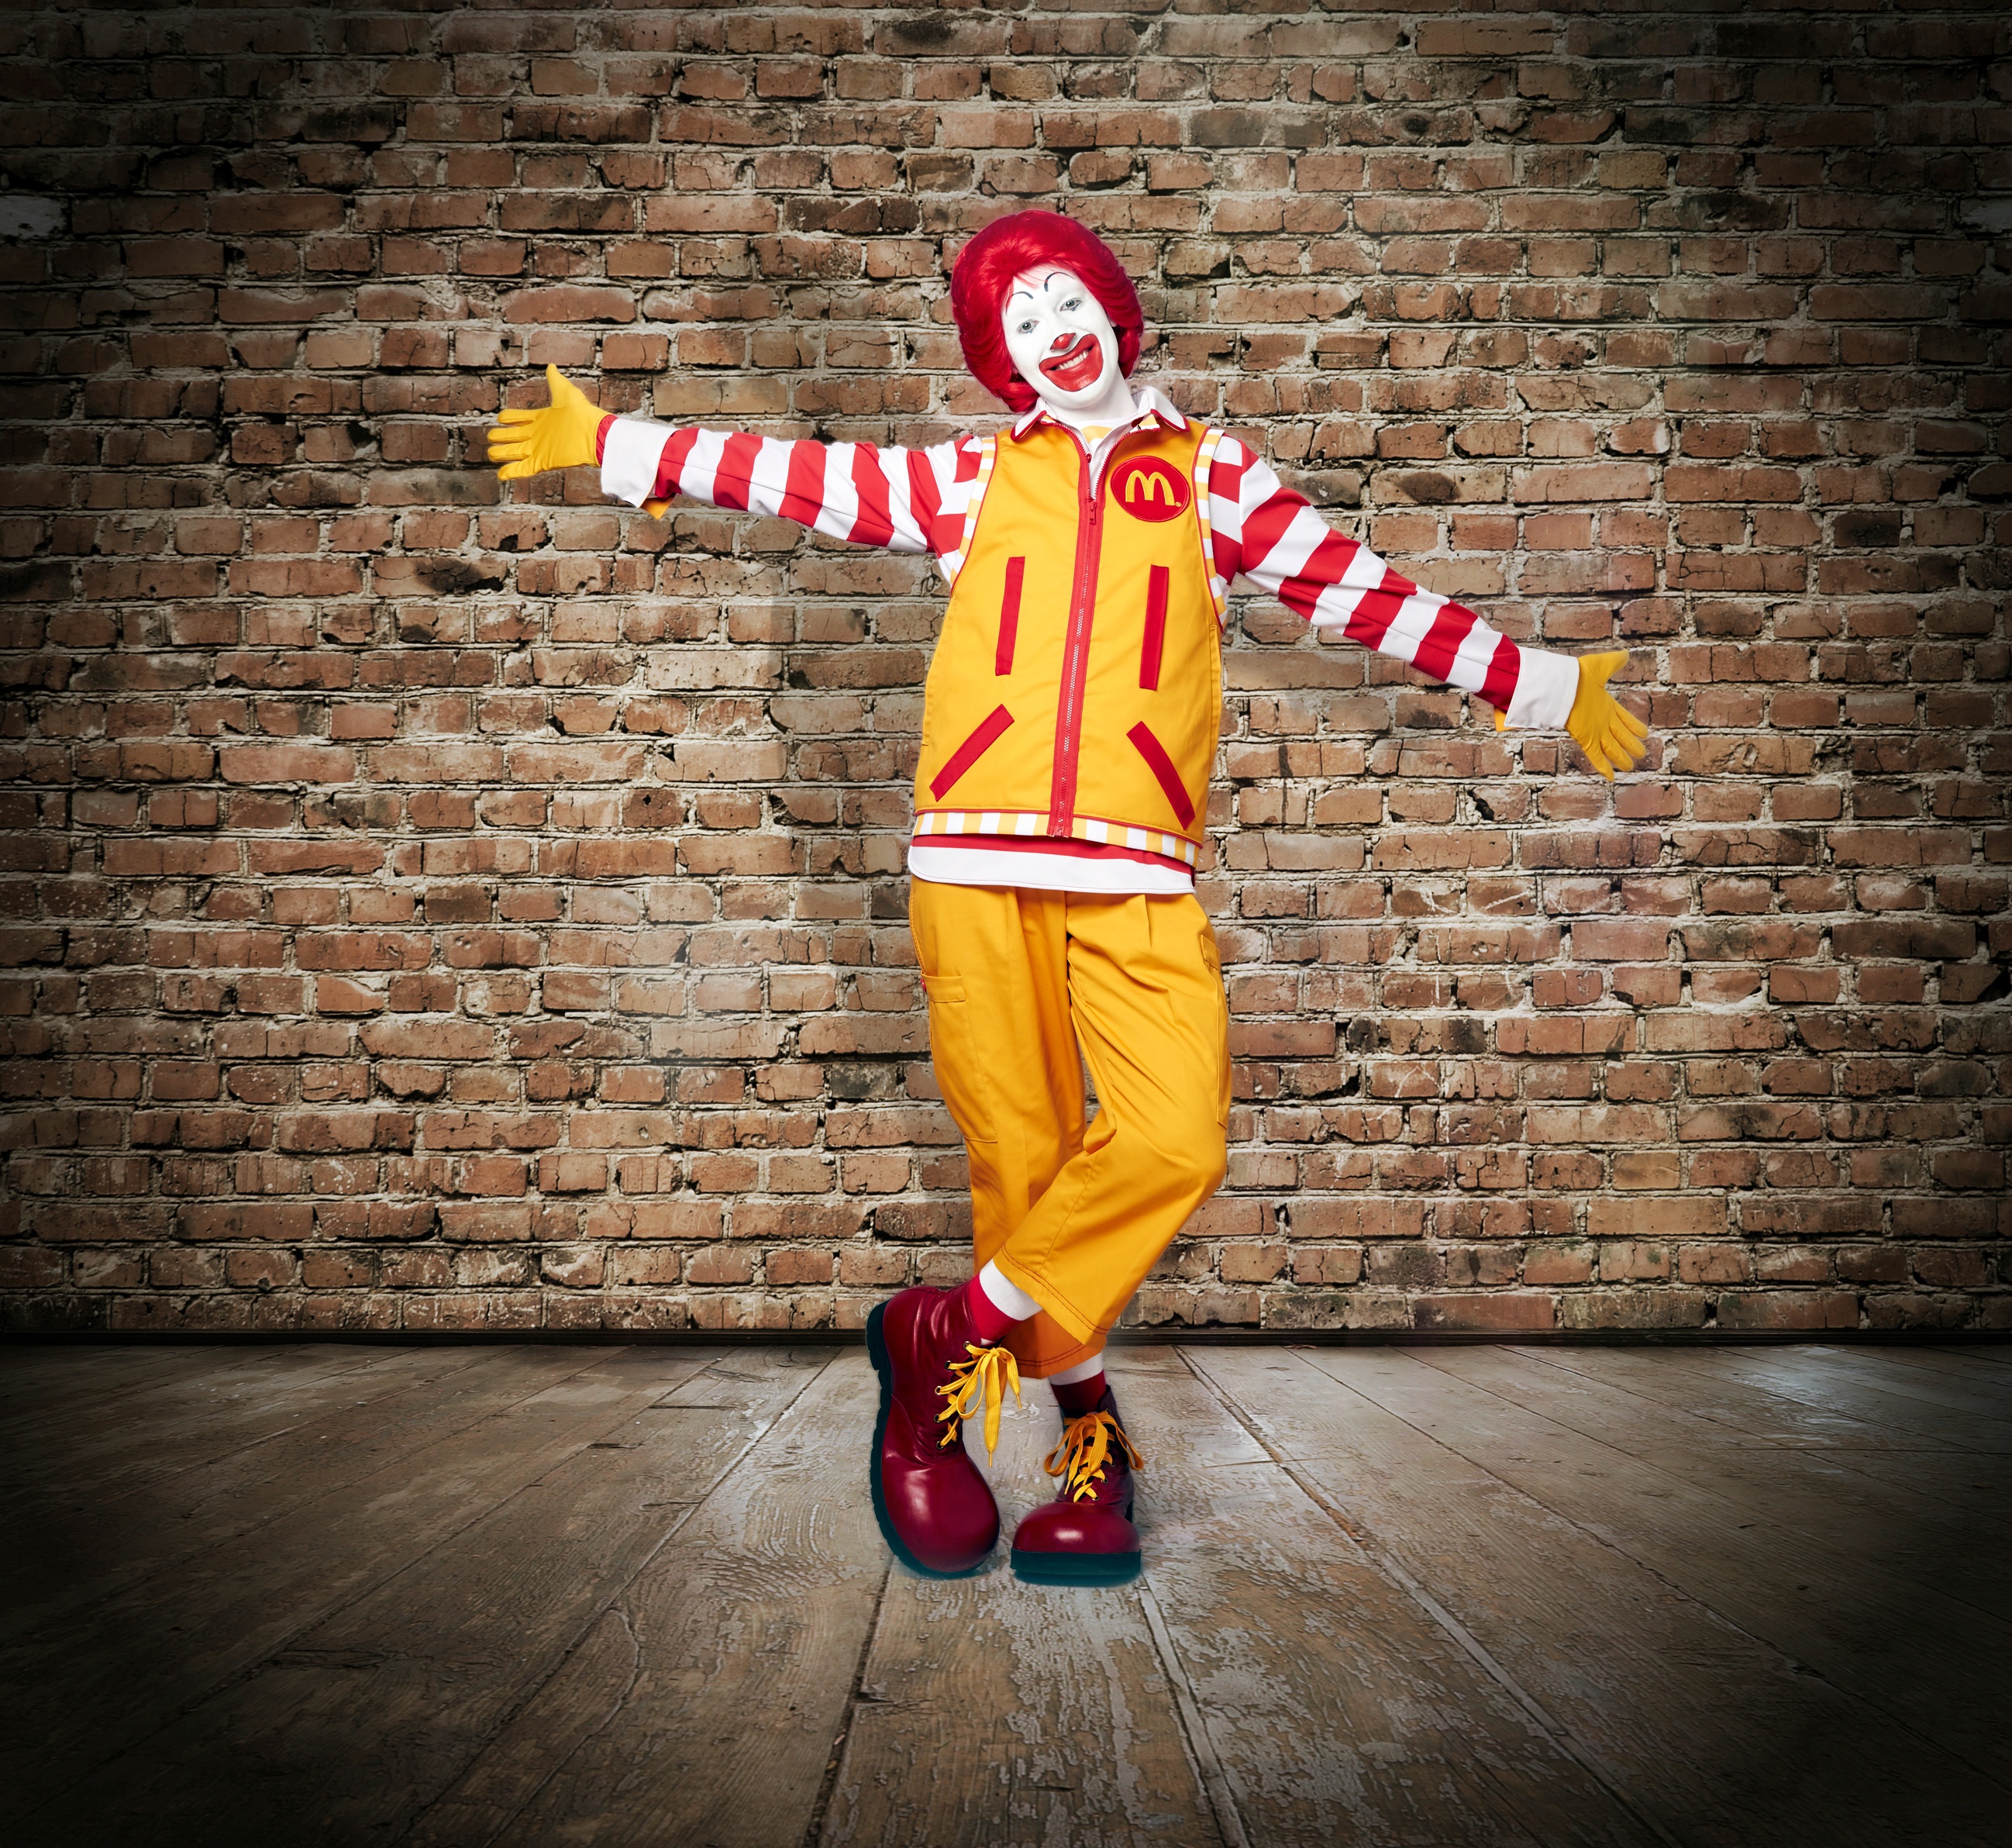 Value Menus, Franchisees, and Fast Food: McDonald’s McPick 2 Journey